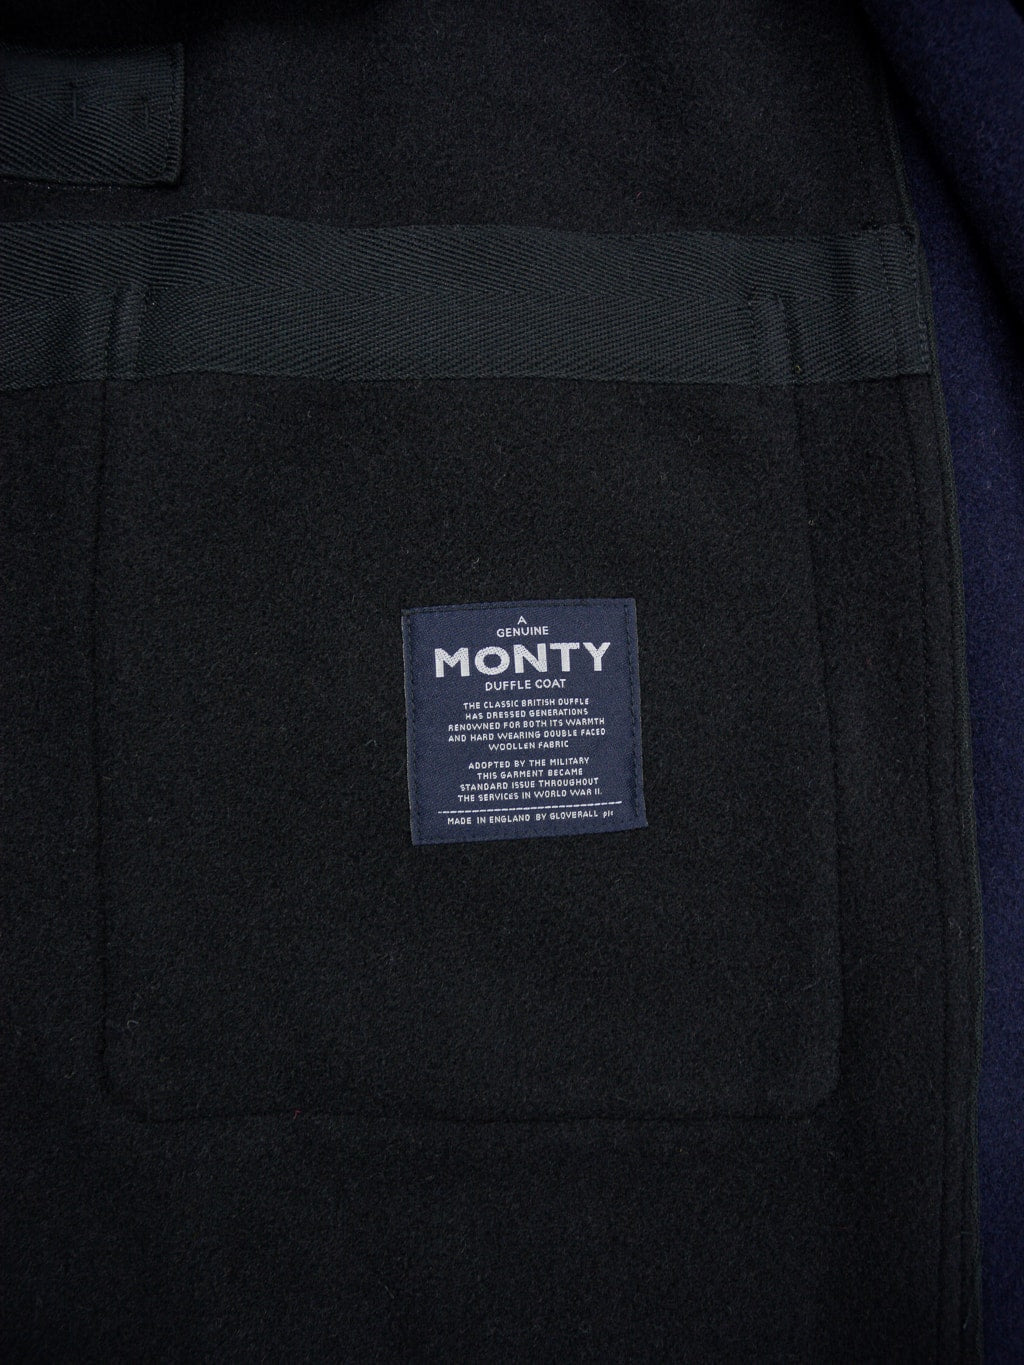 3sixteen x Gloverall Monty Duffle Coat black navy fabric interior